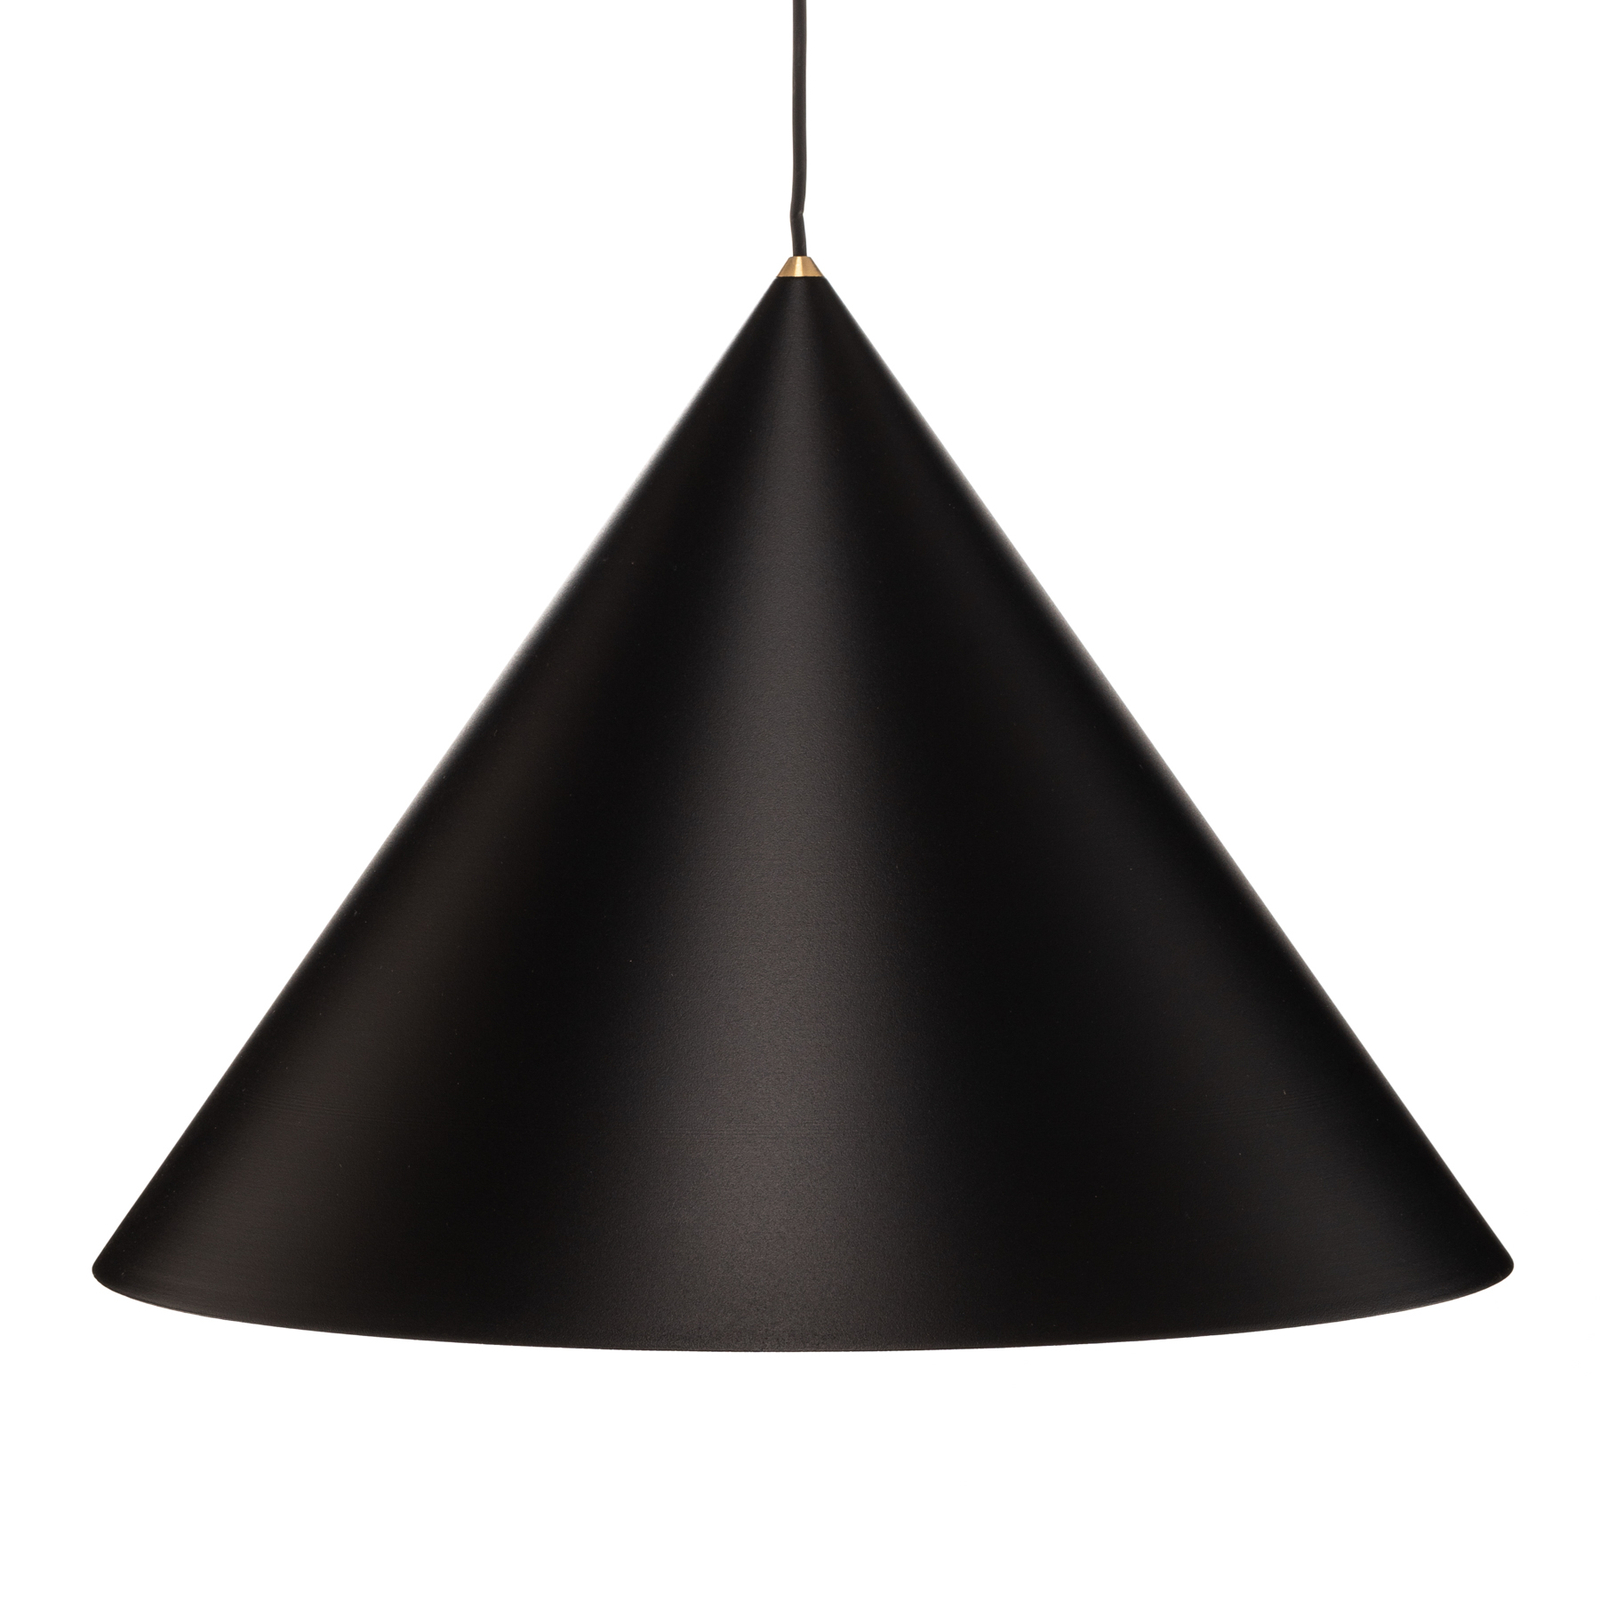 Zenith L metal pendant light in black